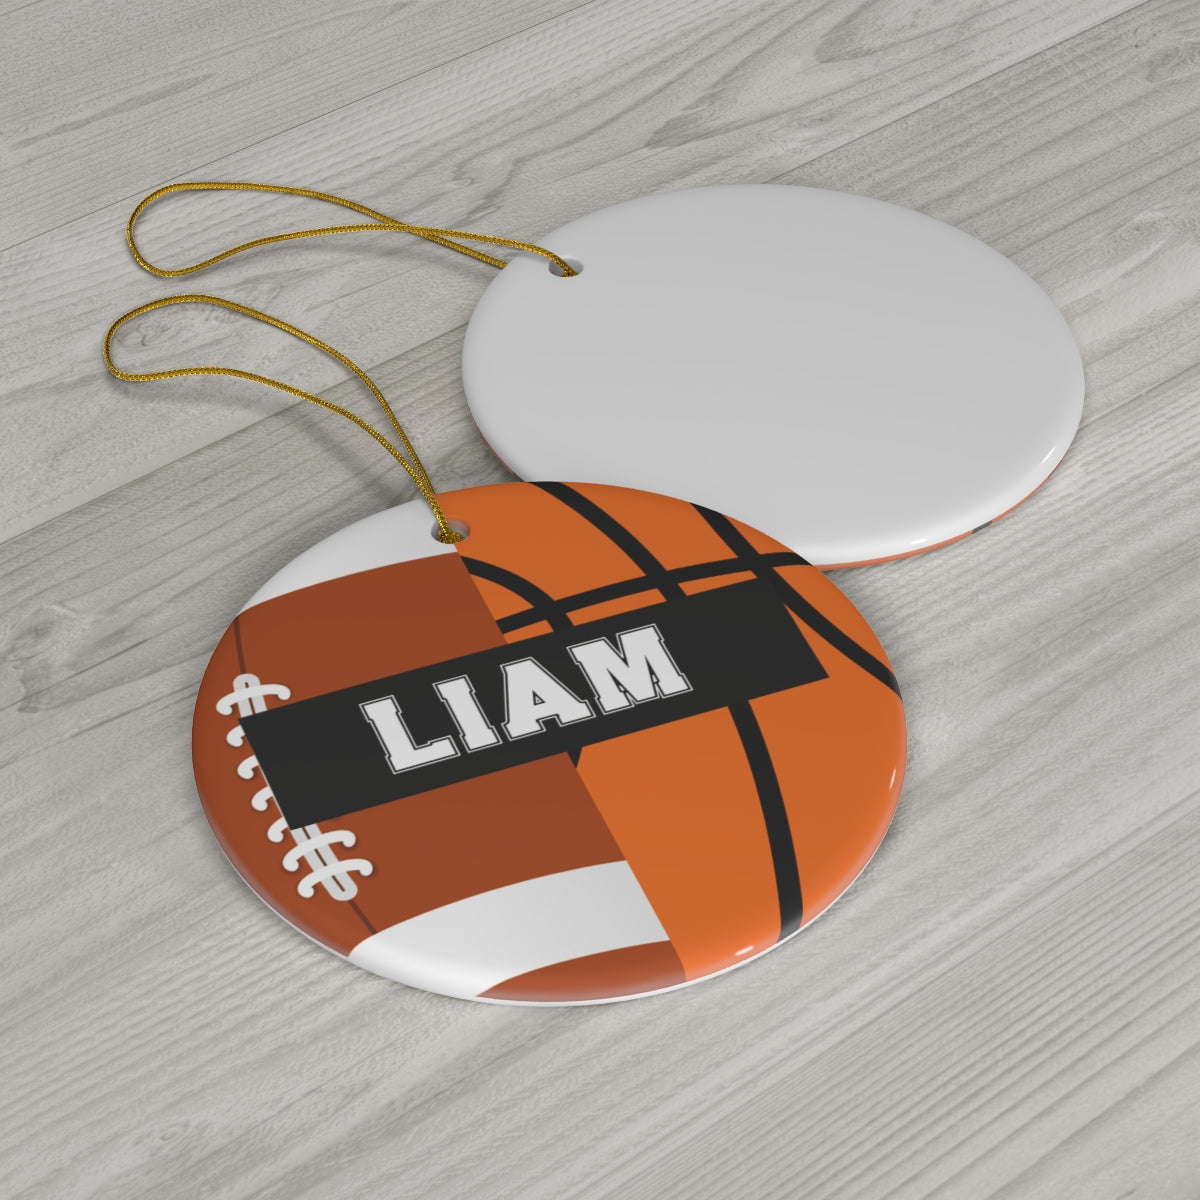 Basketball Football Christmas Ornament - 2 Sport Athlete